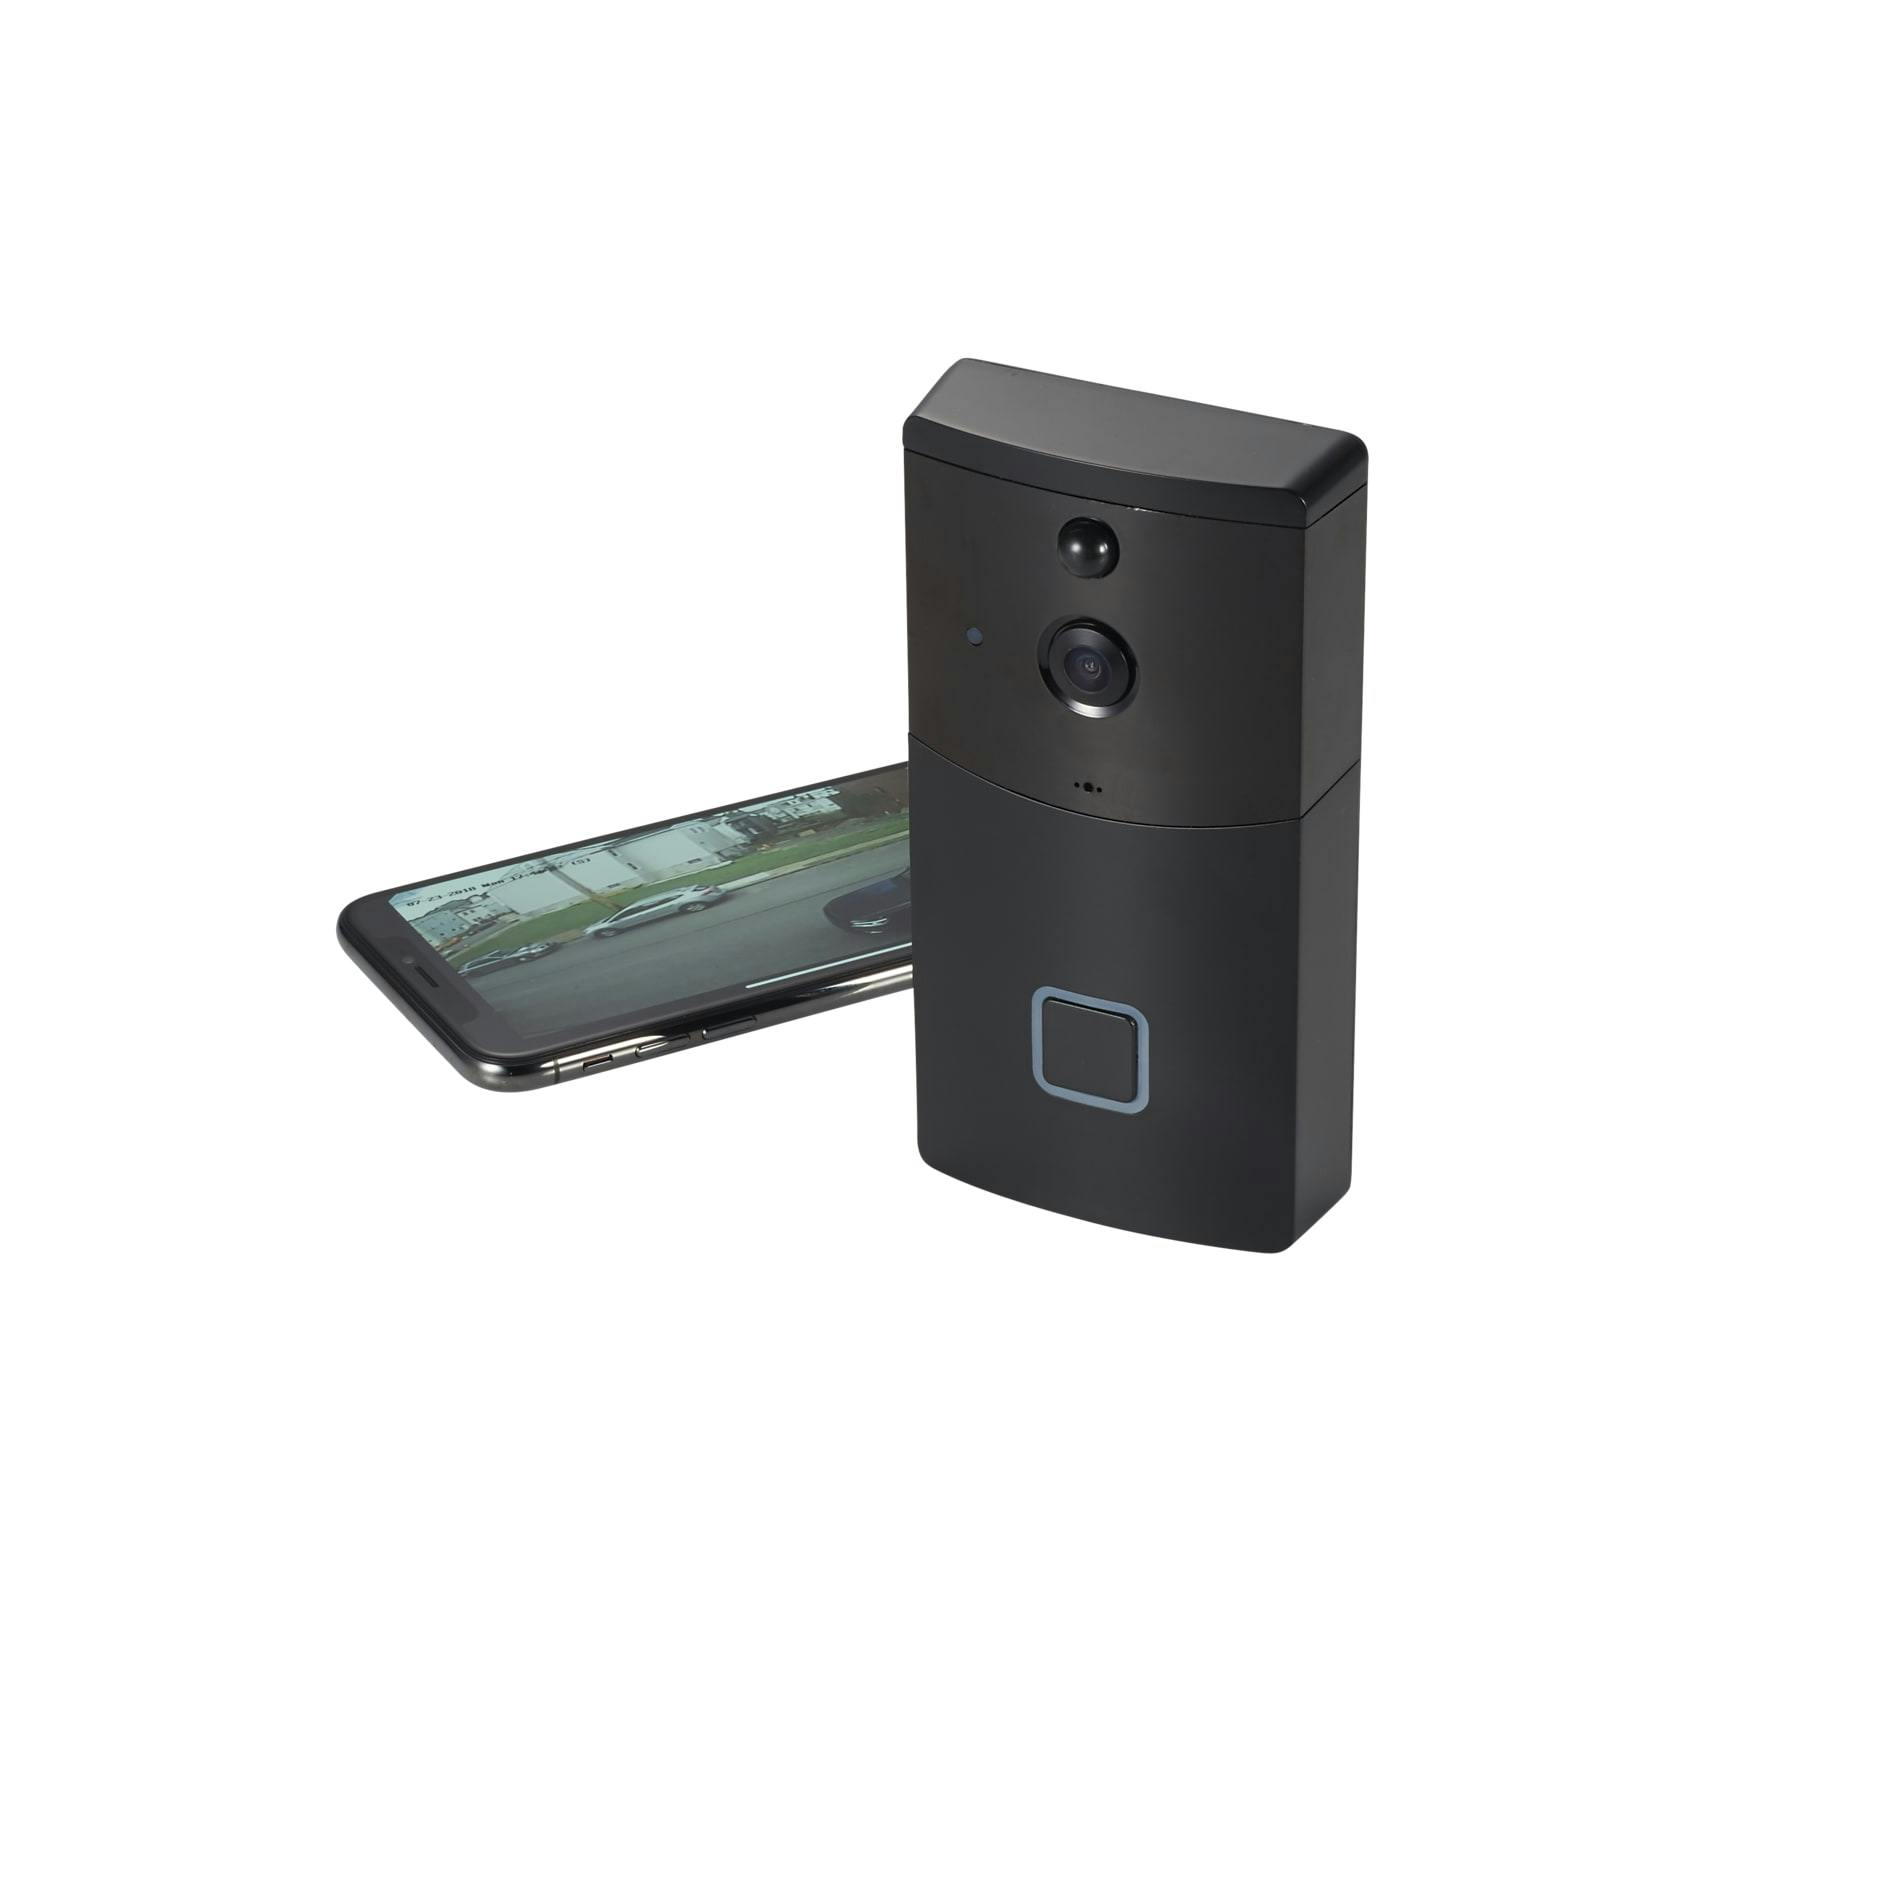 Smart Wifi Video Doorbell - additional Image 1